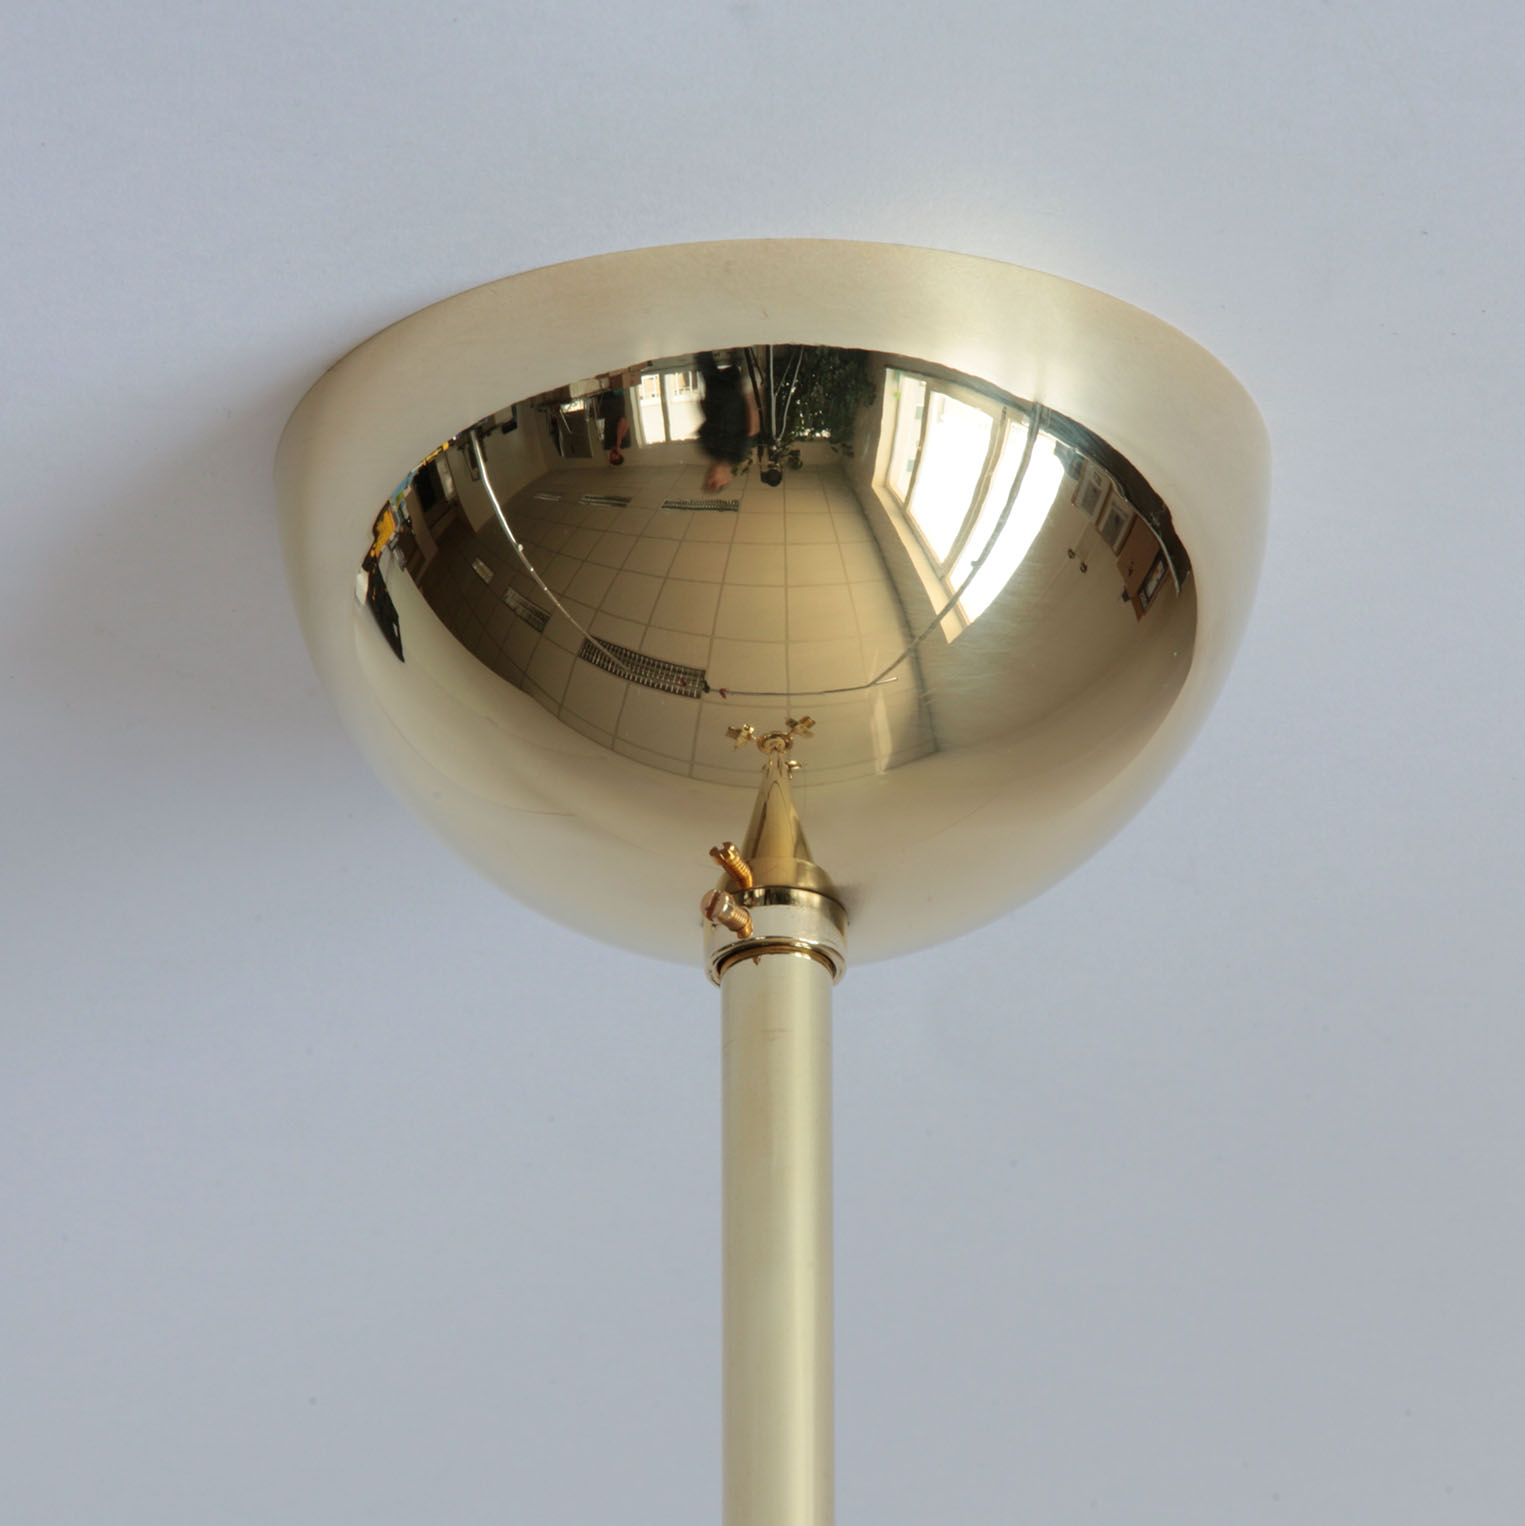 Chandelier With Four Small Glass Globes Made of White Opal Glass: Der Baldachin in der Oberfläche Messing lackiert und poliert